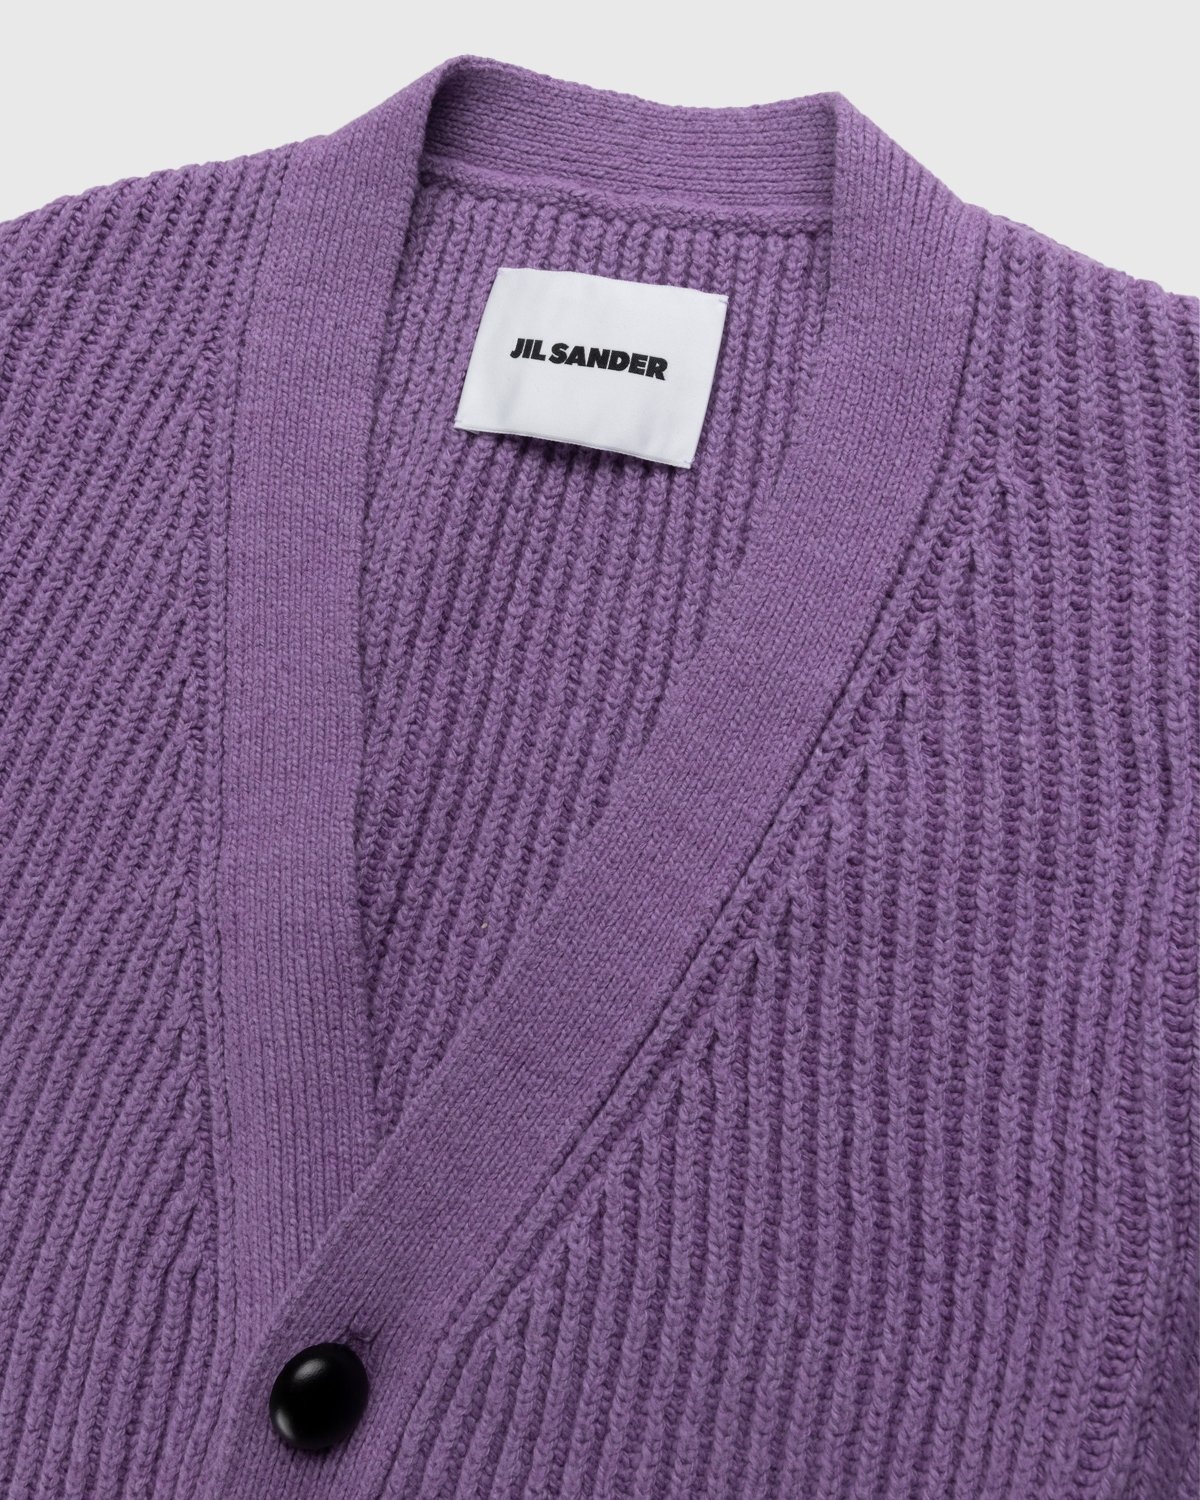 Jil Sander – Rib Knit Cardigan Medium Purple - Cardigans - Purple - Image 3